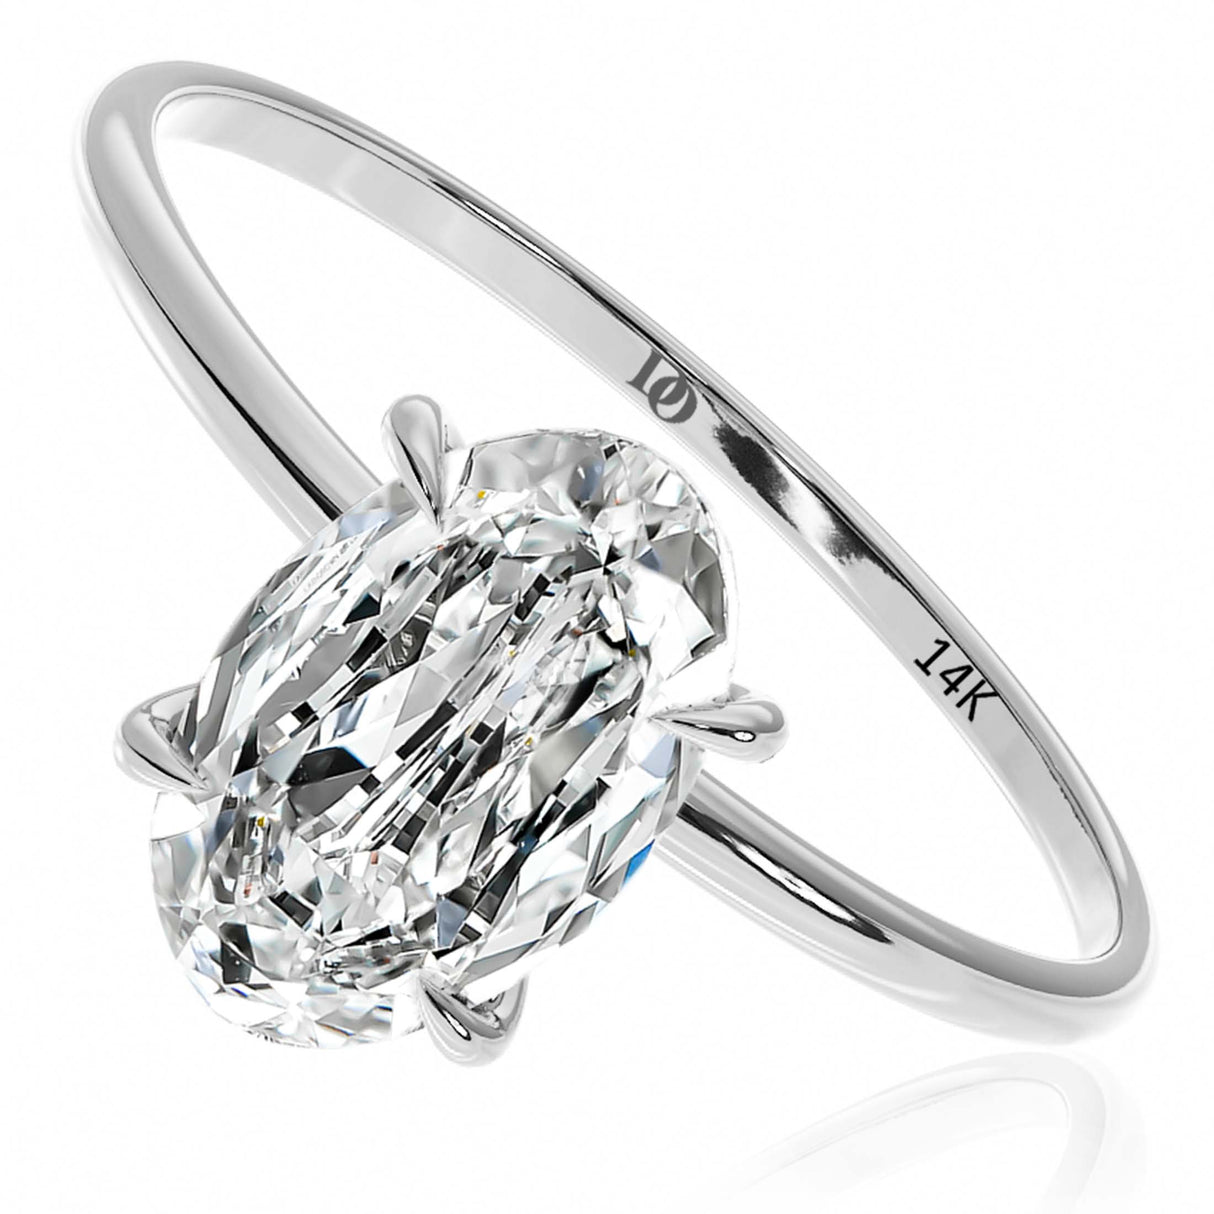 2 Ct Diamond Ring, IGI Certificate, 2 ct Oval Lab Grown Diamond Solitaire Ring, 10x7 mm